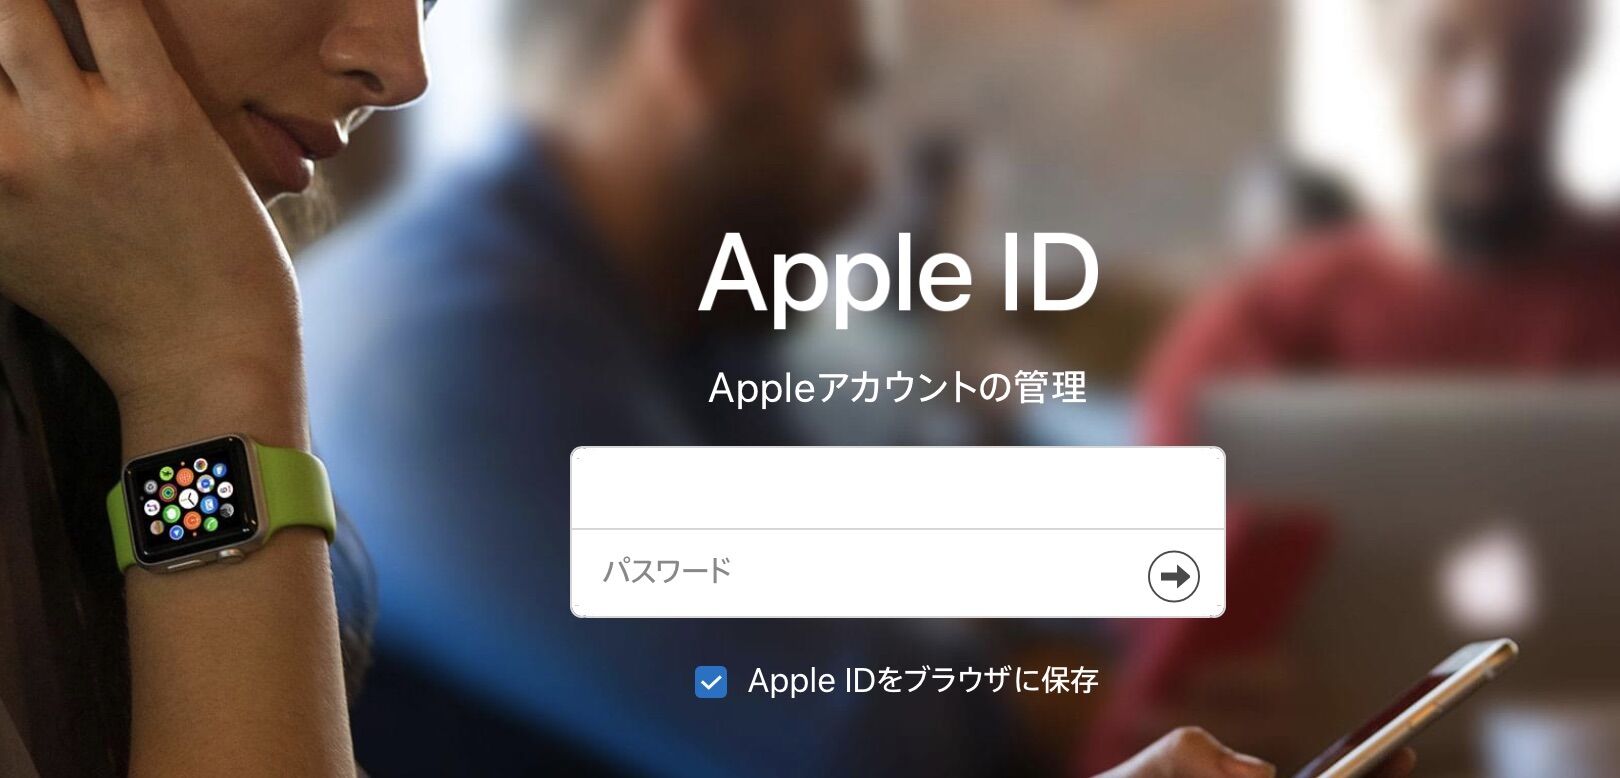 Apple Id ラヂオ少年のフォトグラフィティ